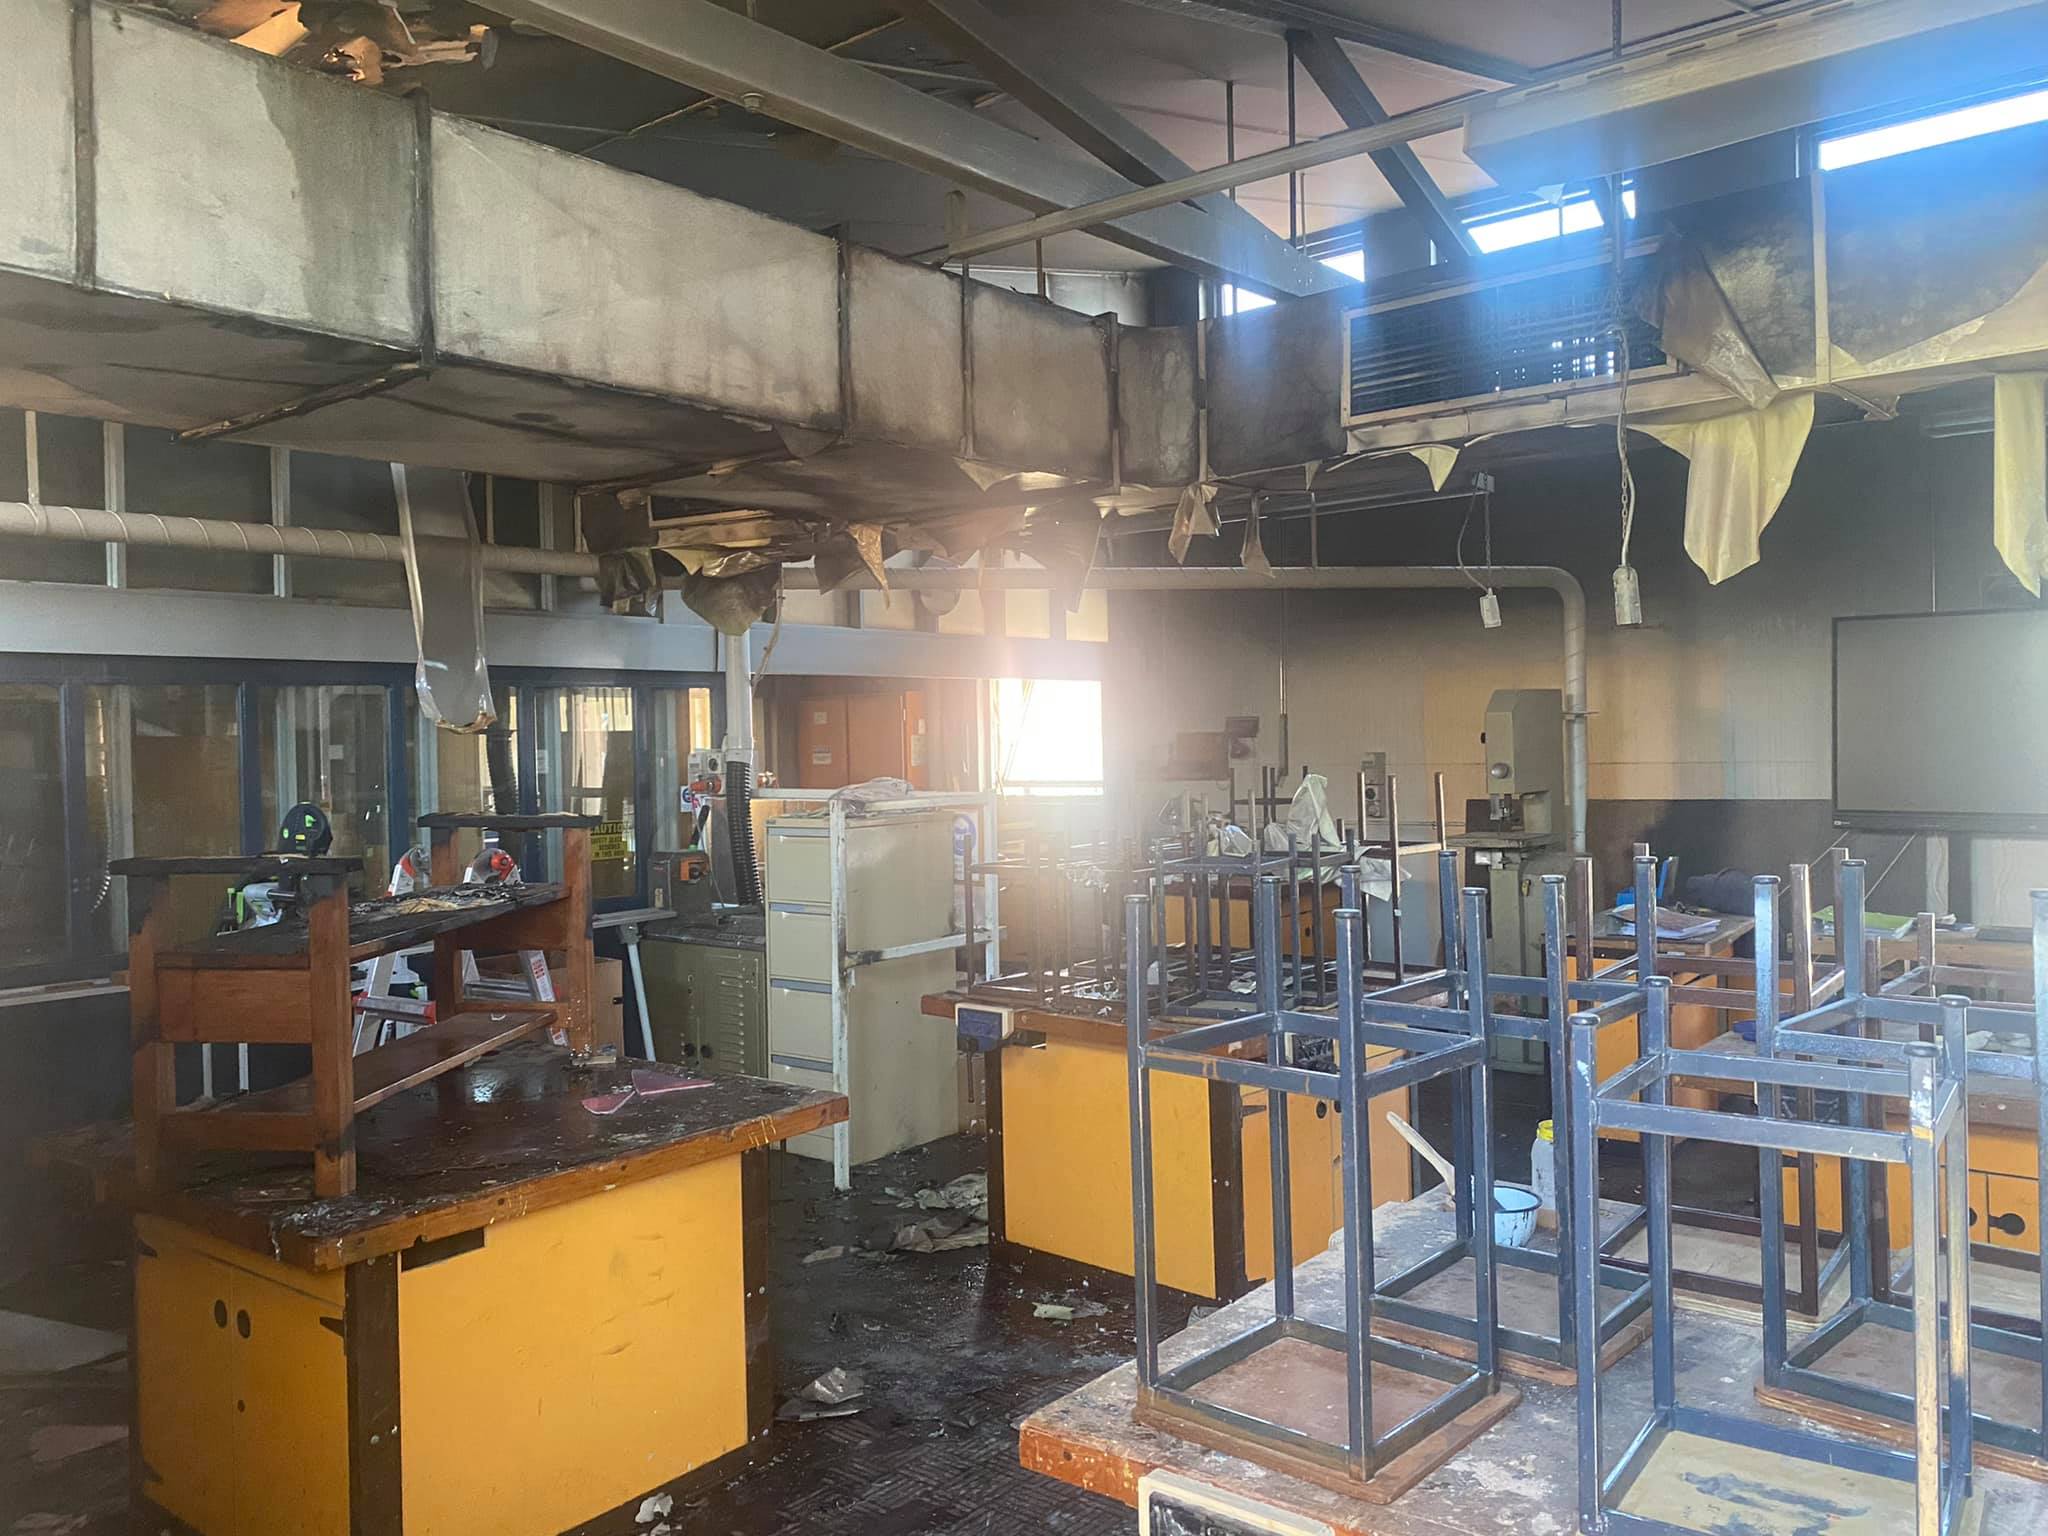 Industrial arts classroom damaged in school blaze